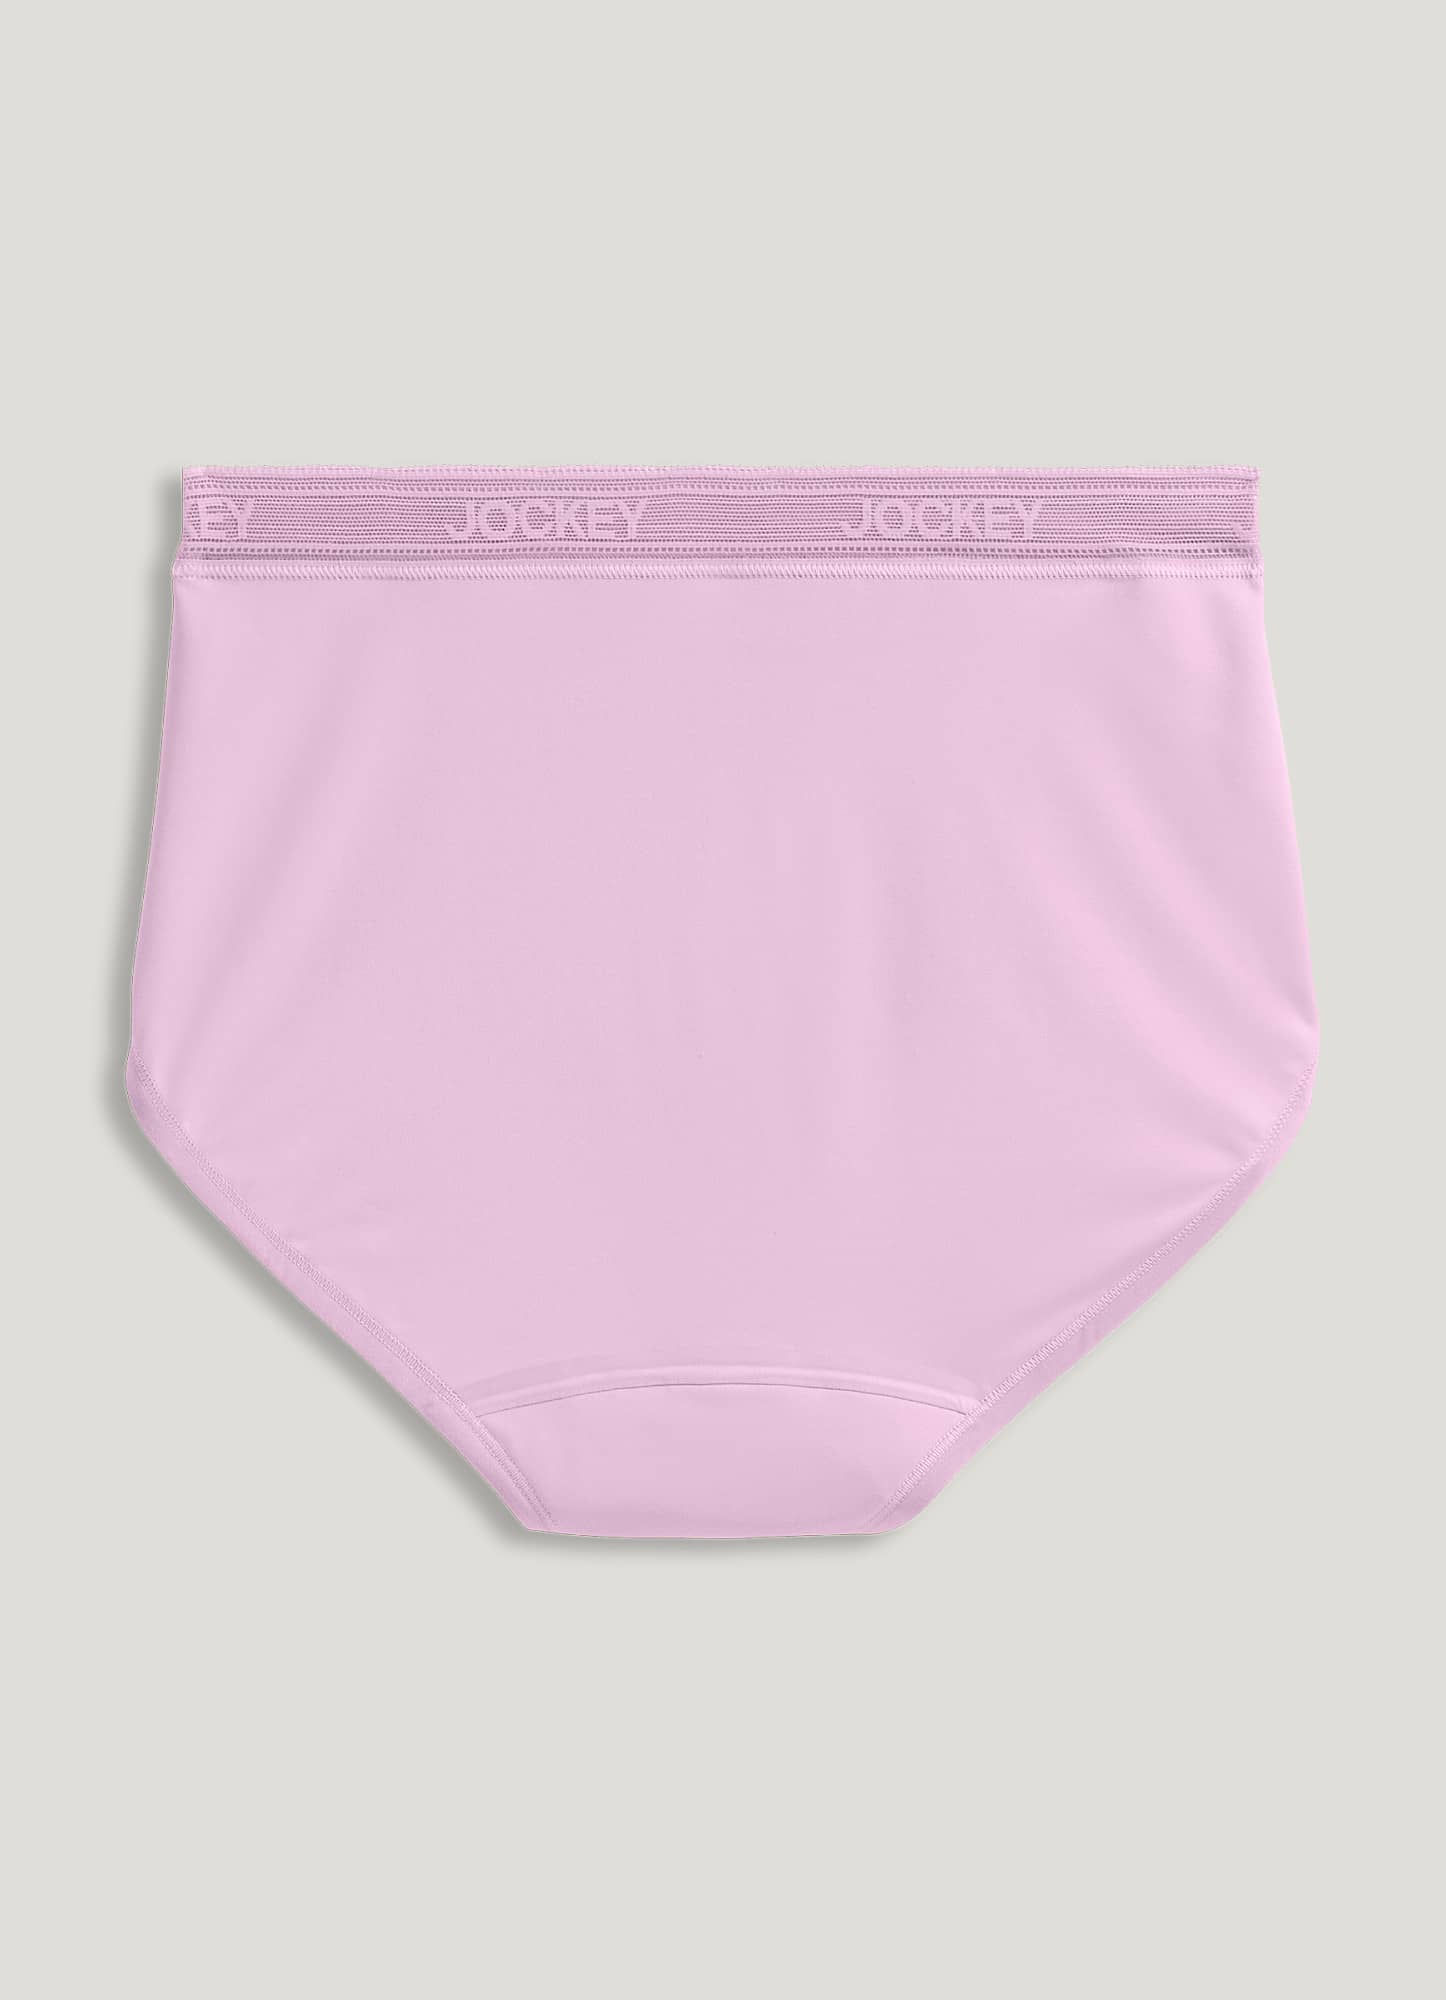  Jockey Women's Underwear Worry Free Microfiber Light Absorbency  Thong, Black, XS : Health & Household